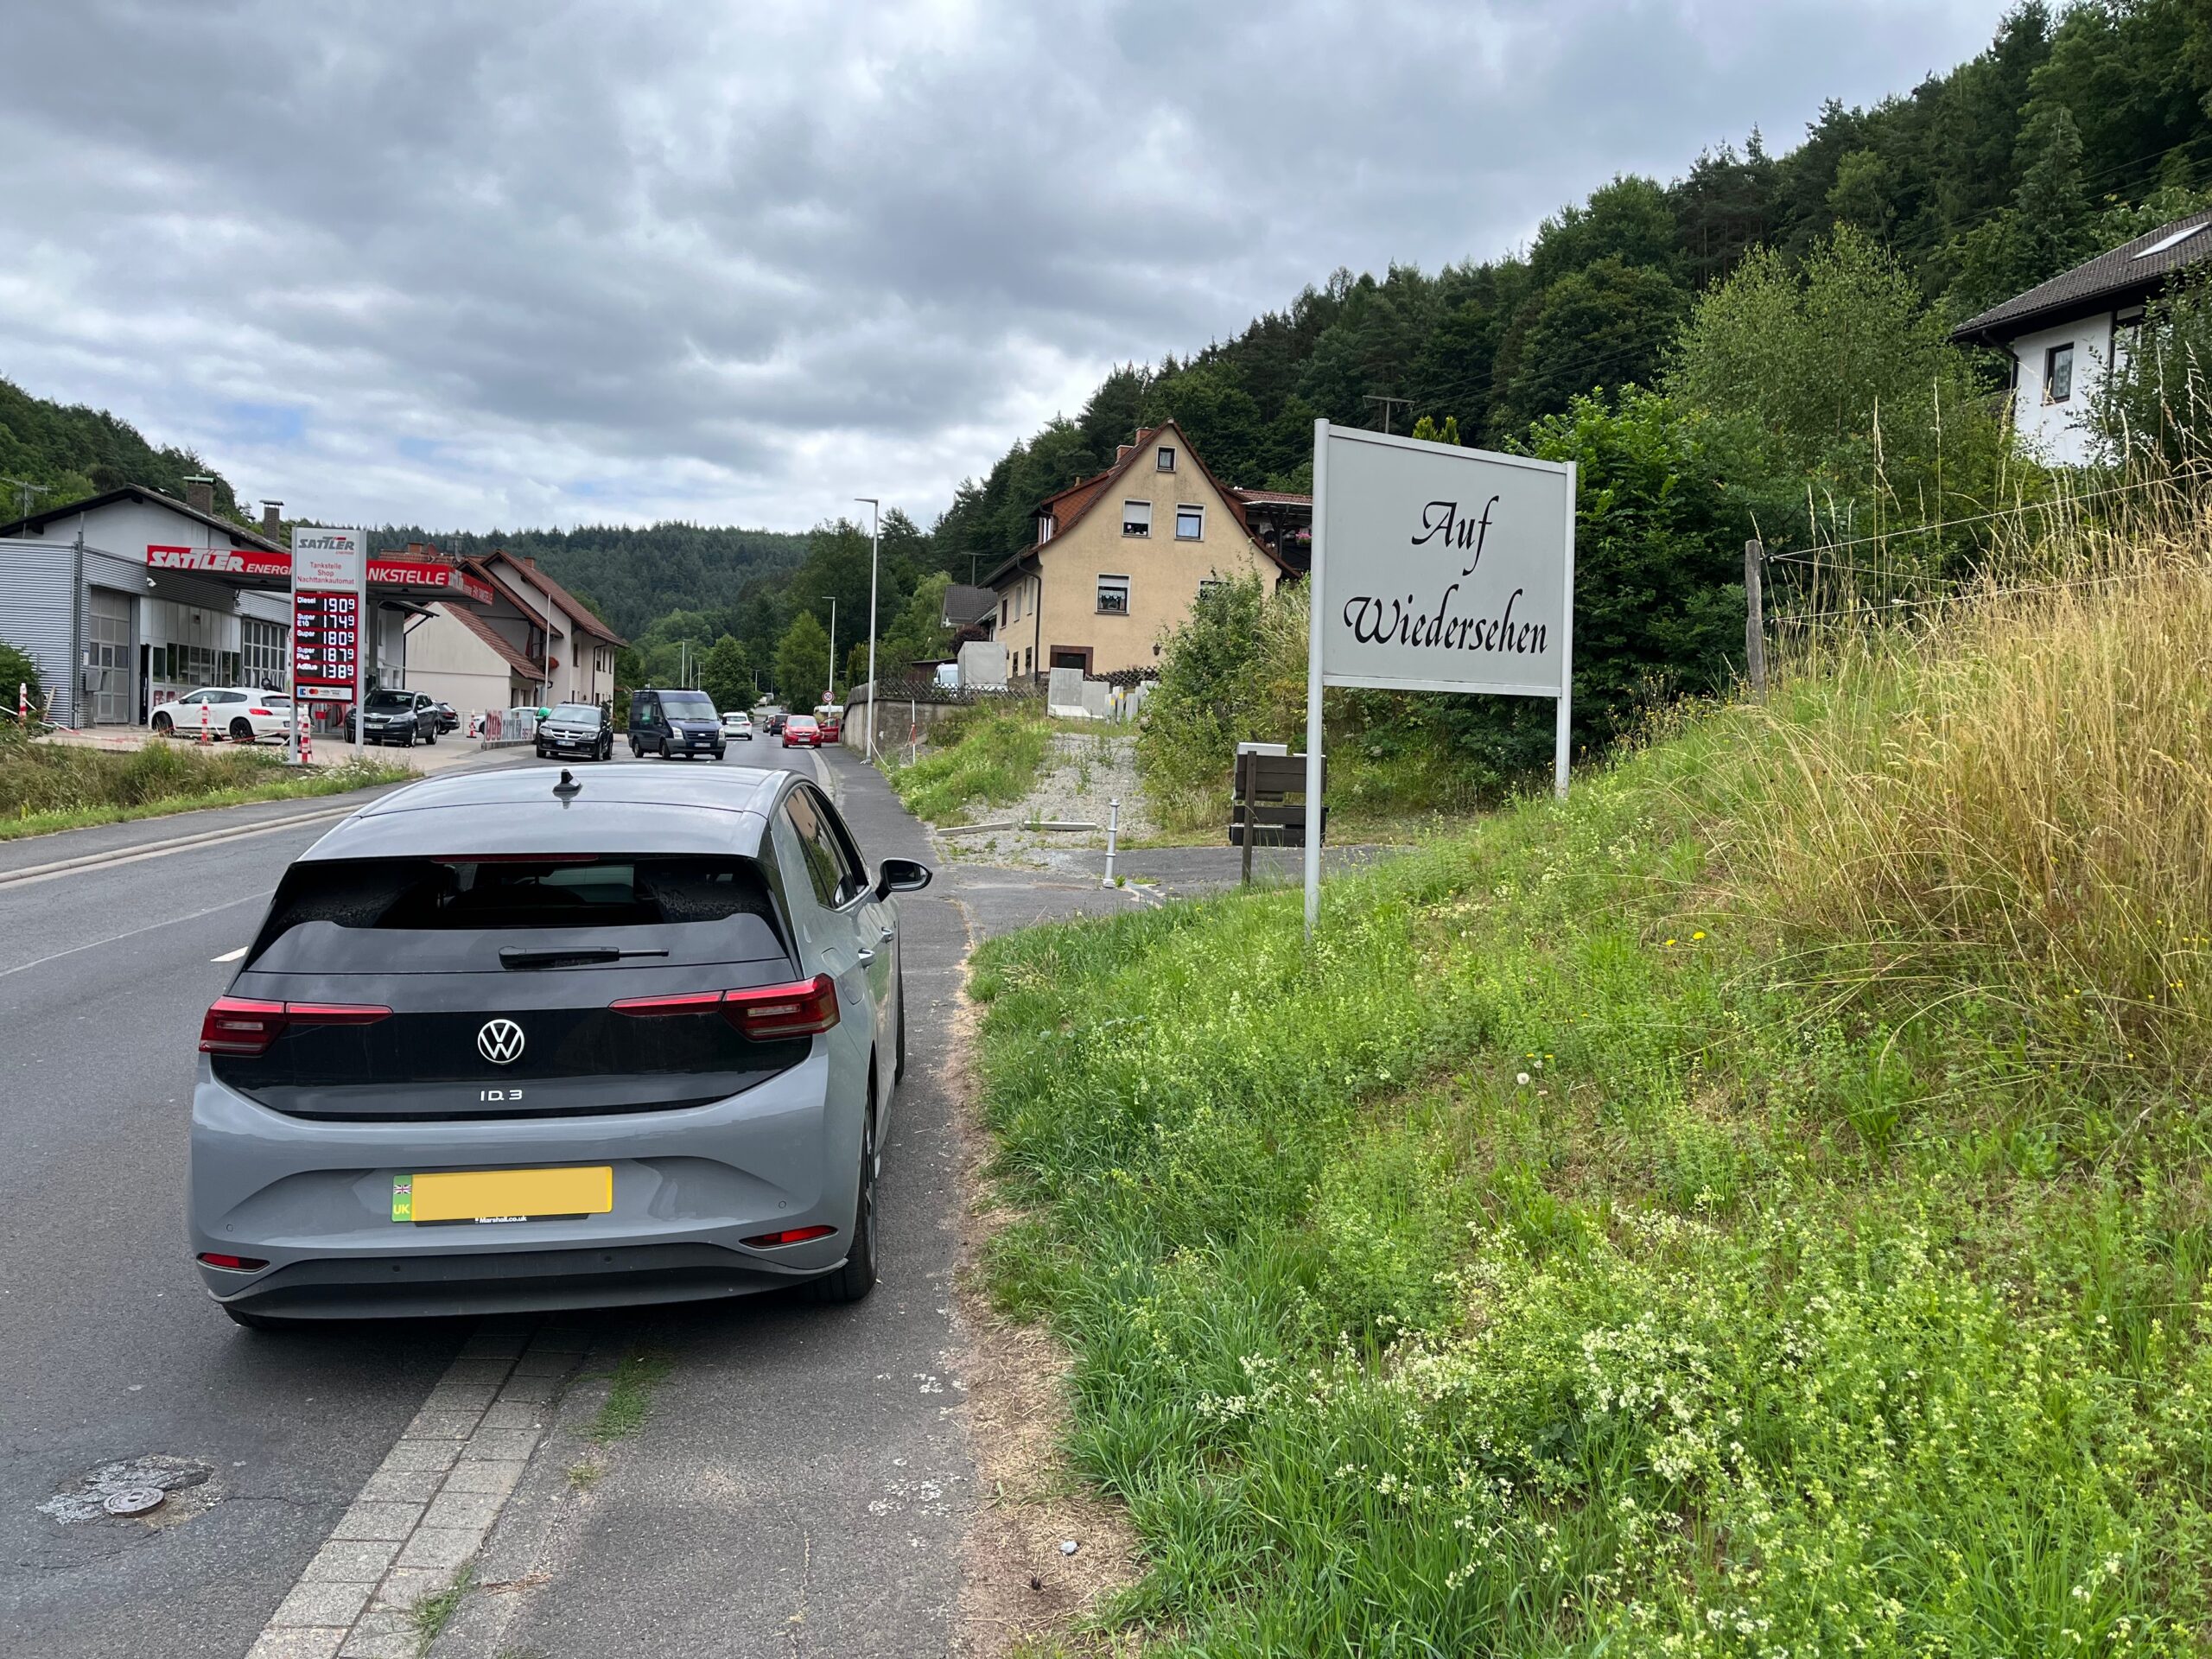 Volkswagen ID.3 58kWh - Road trip report: Europe, Summer 2022